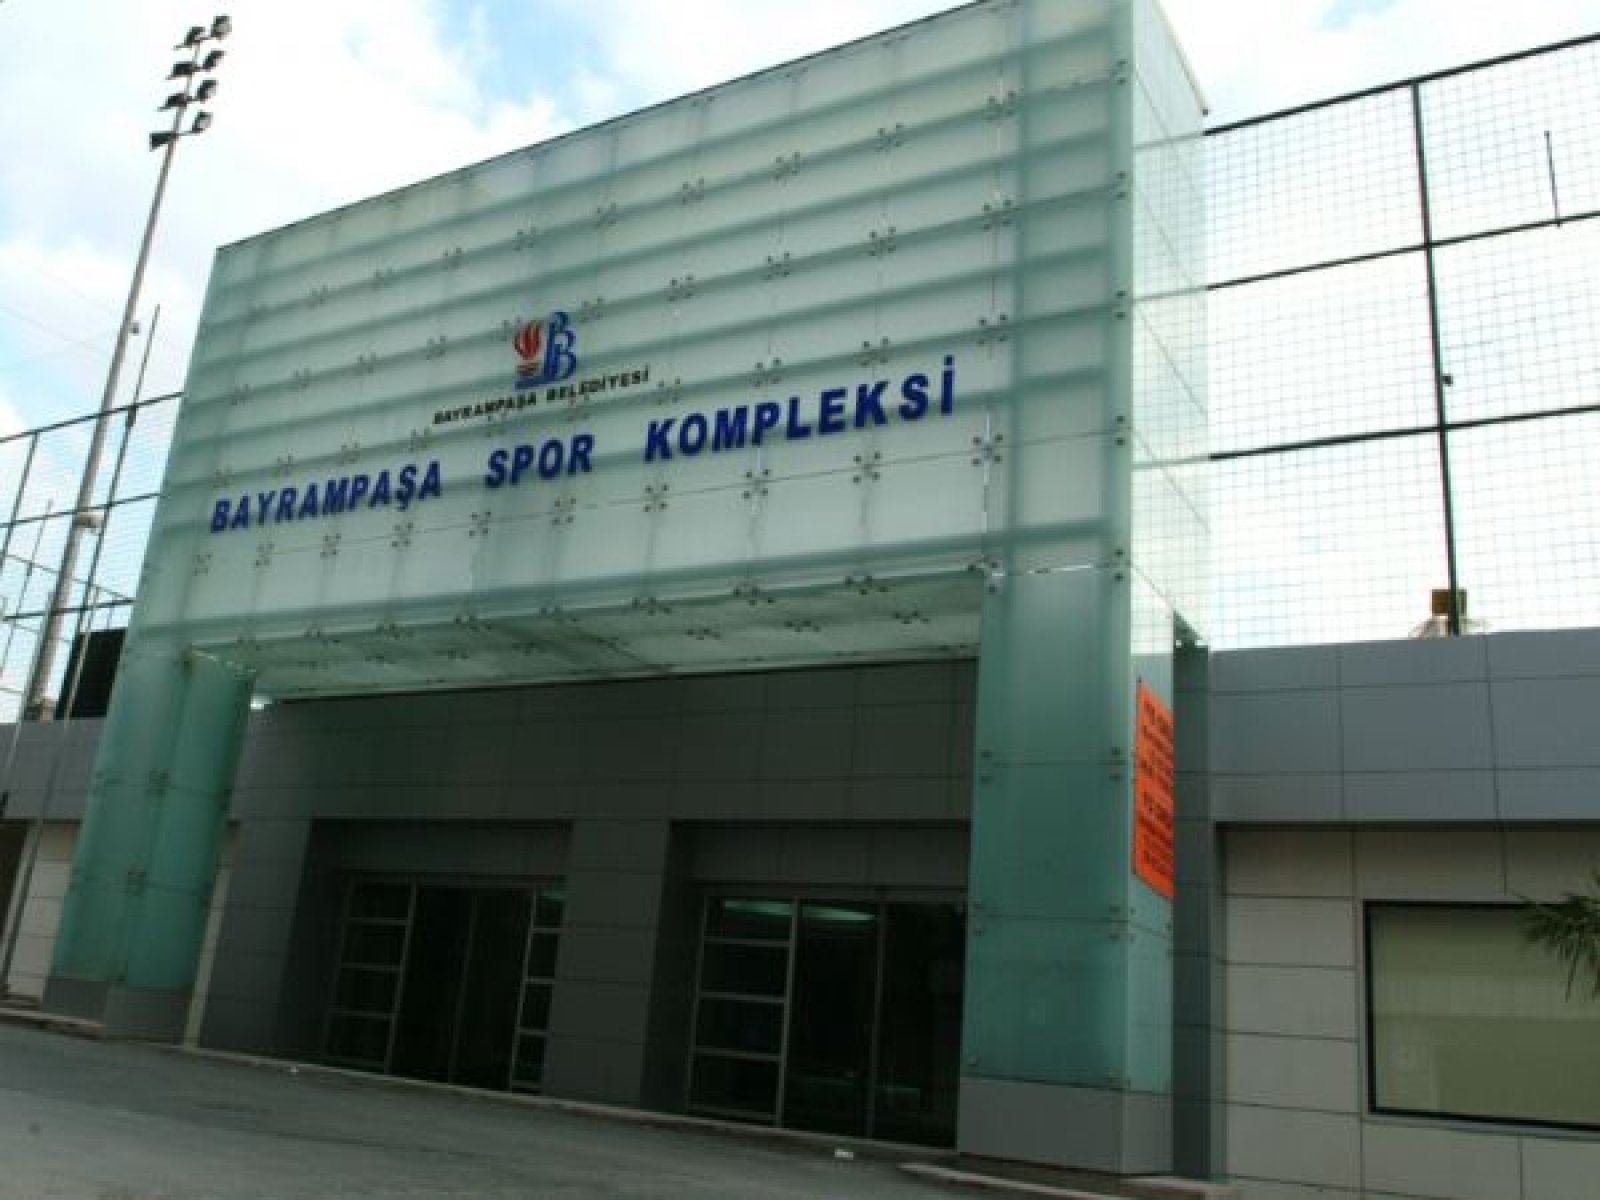 Bayrampaşa Sports Complex